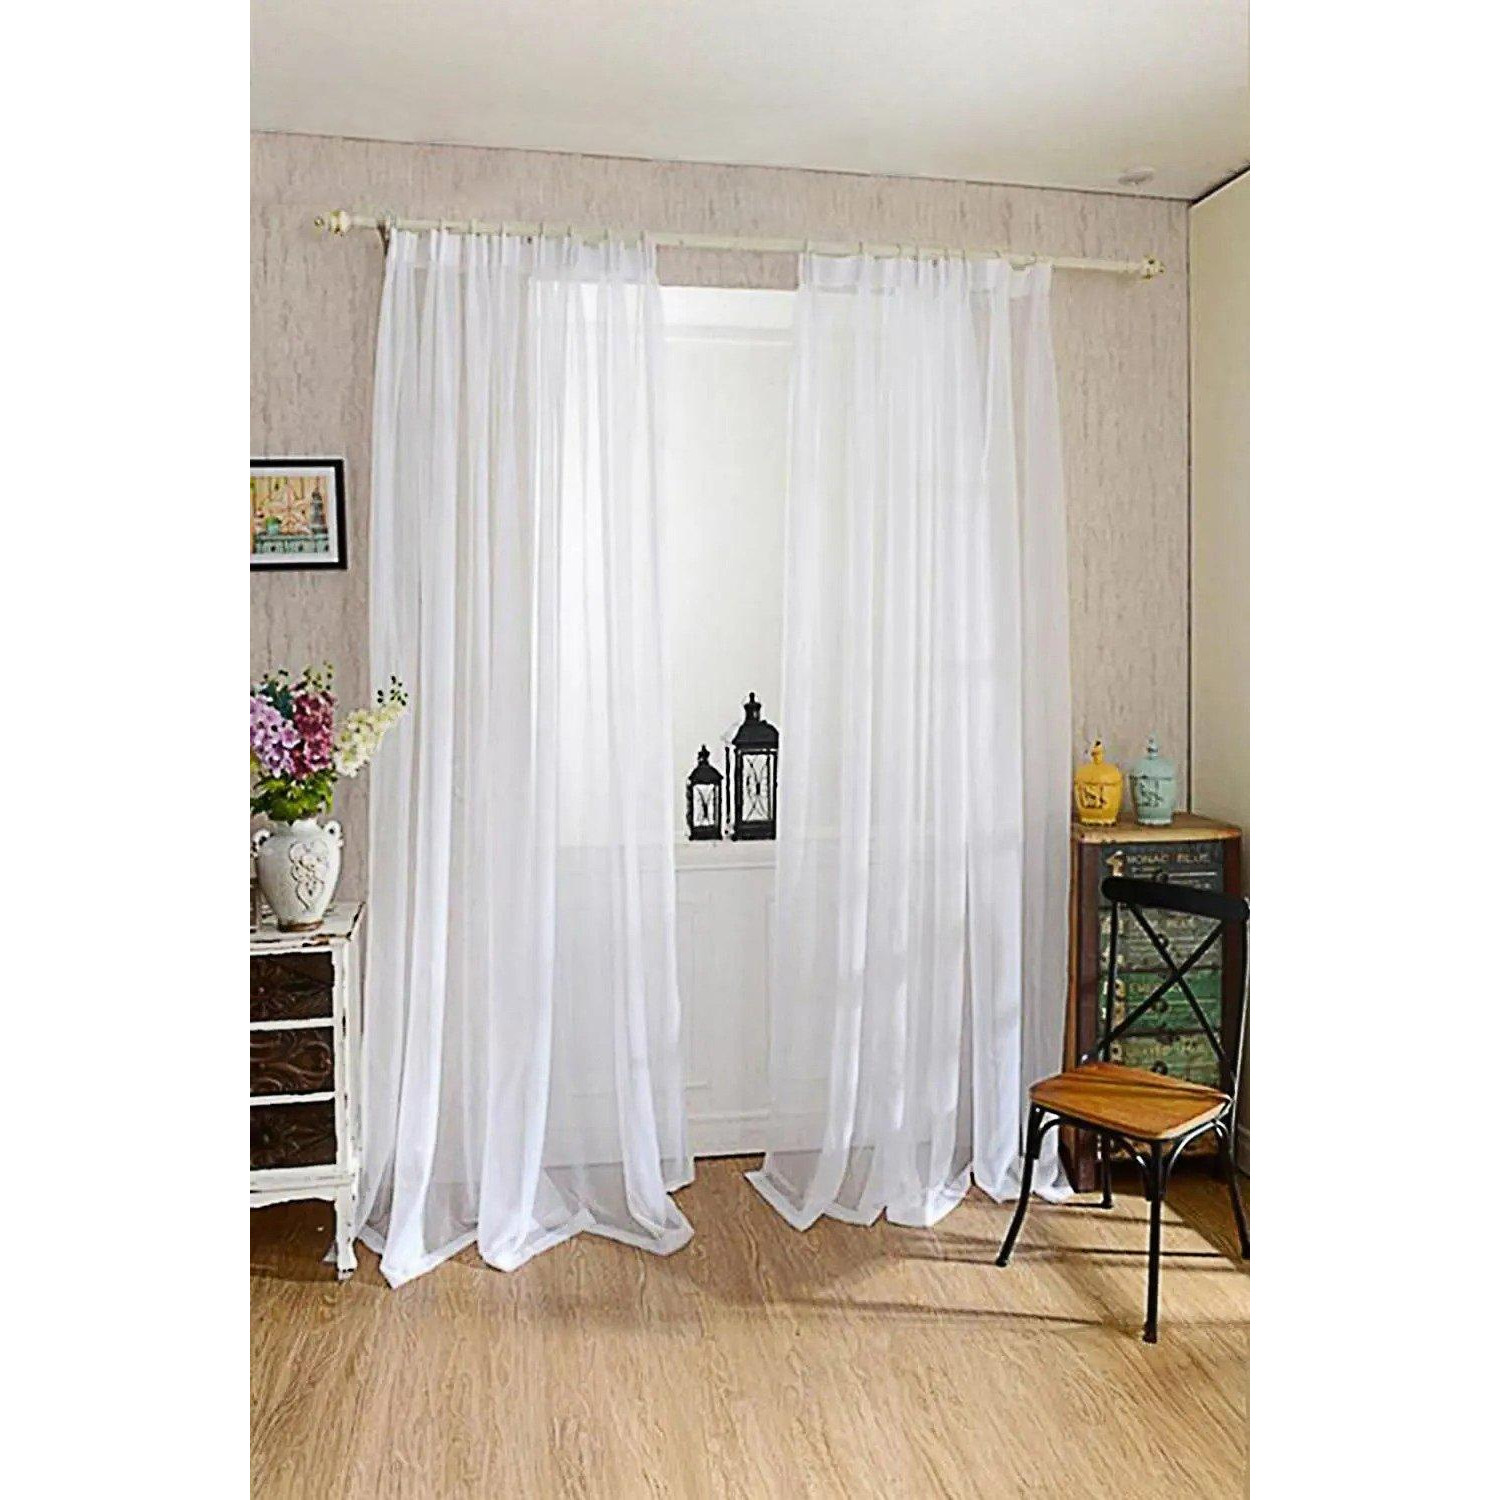 100cm W x 200cm H Single Piece White Voile Panel Sheer Curtain - image 1